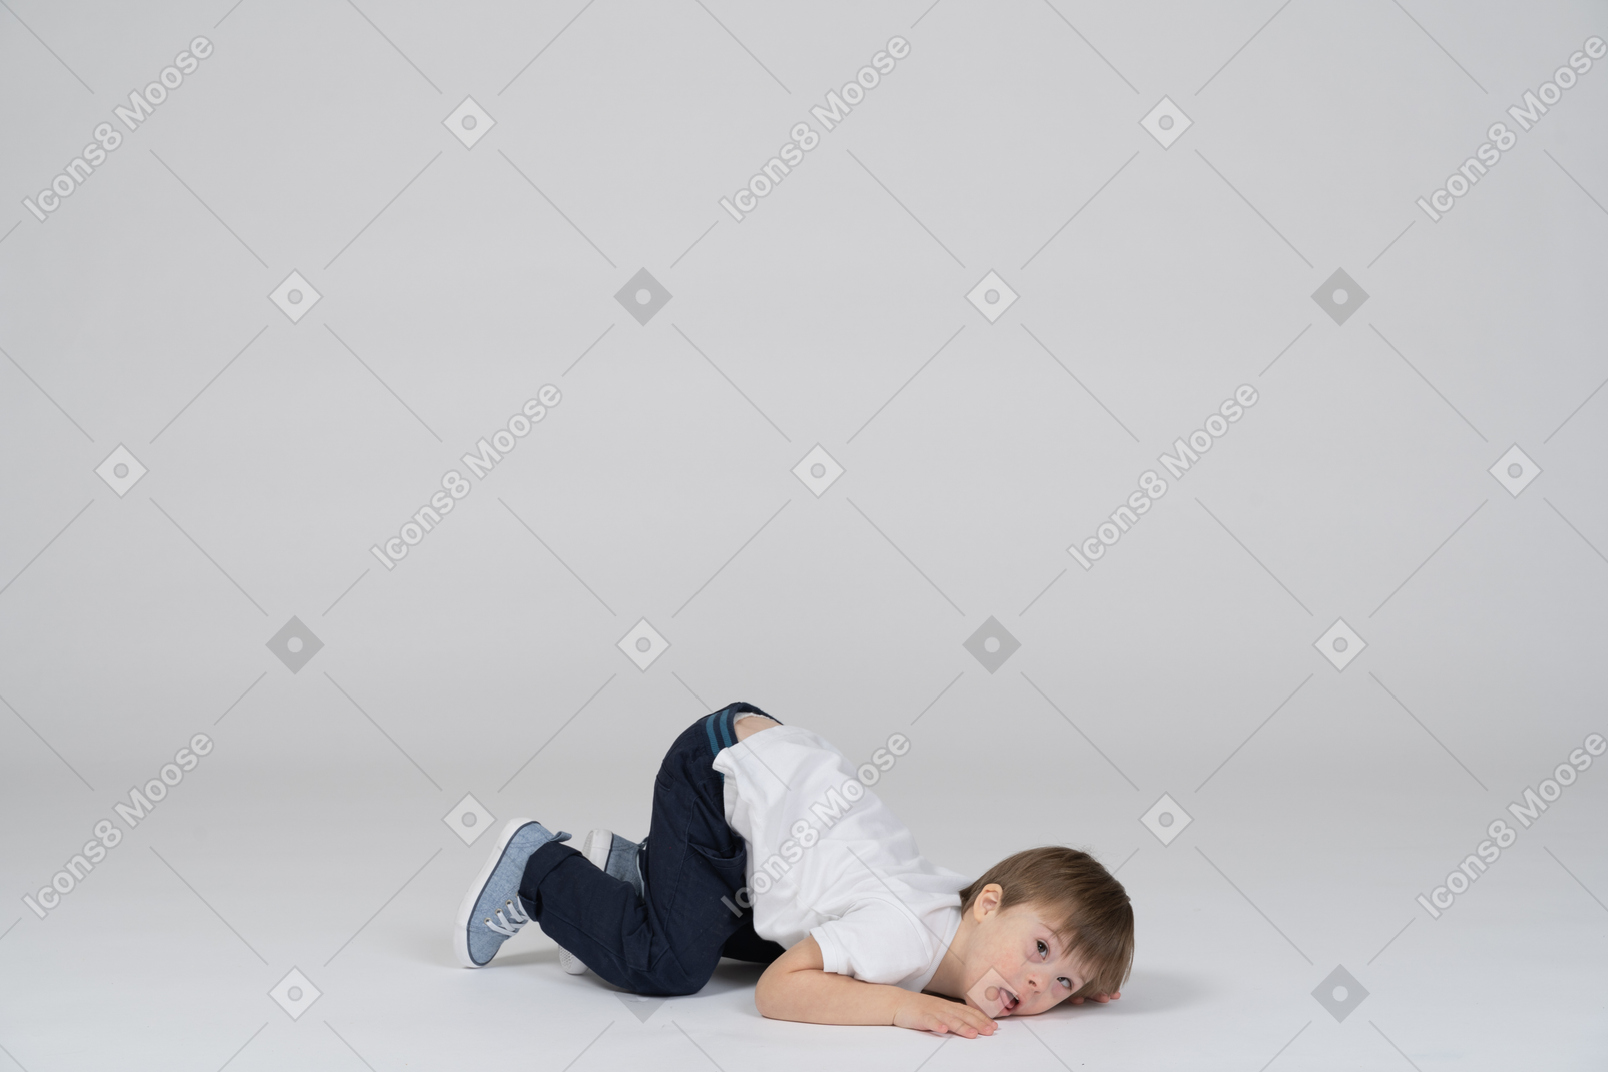 Little boy lying face down on the floor